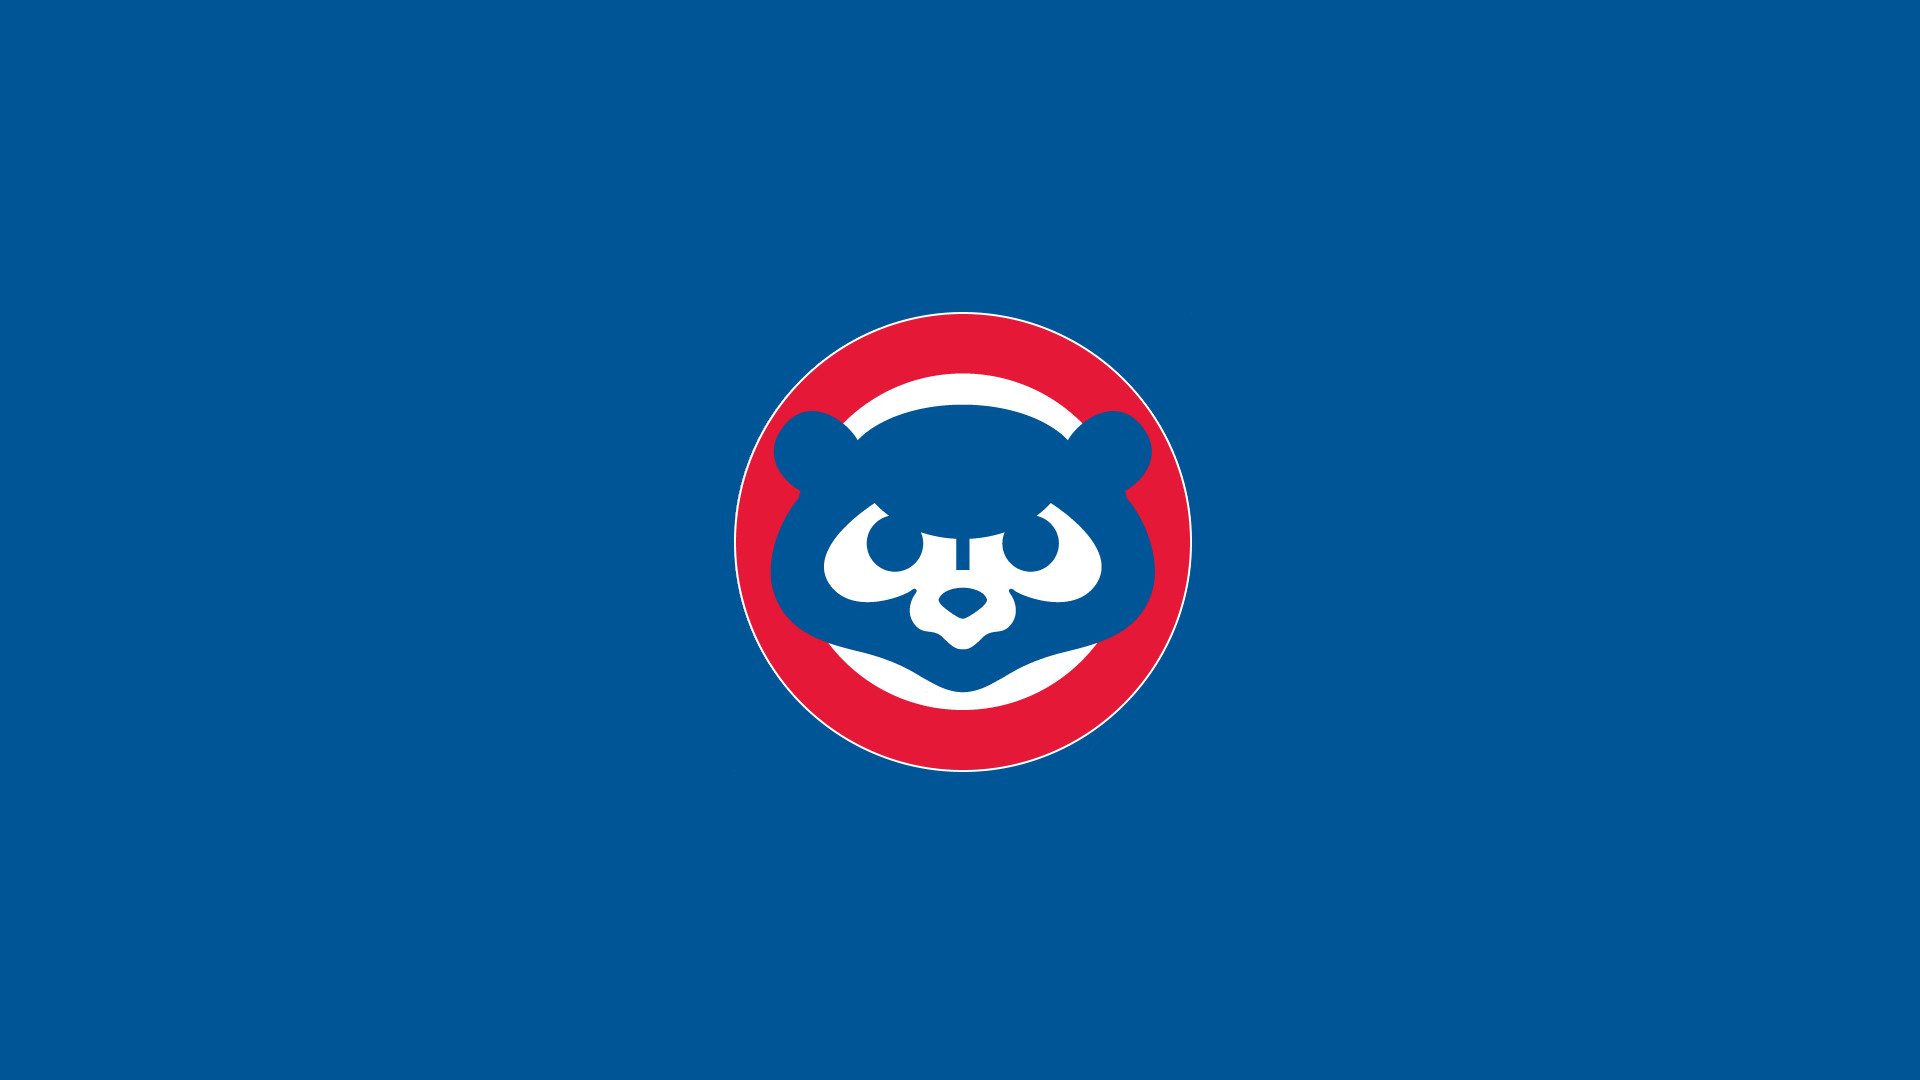 1920x1080 Best 20+ Cubs wallpaper ideas on Pinterest | Chicago cubs wallpaper, Did  the cubs win and Chicago cubs mlb